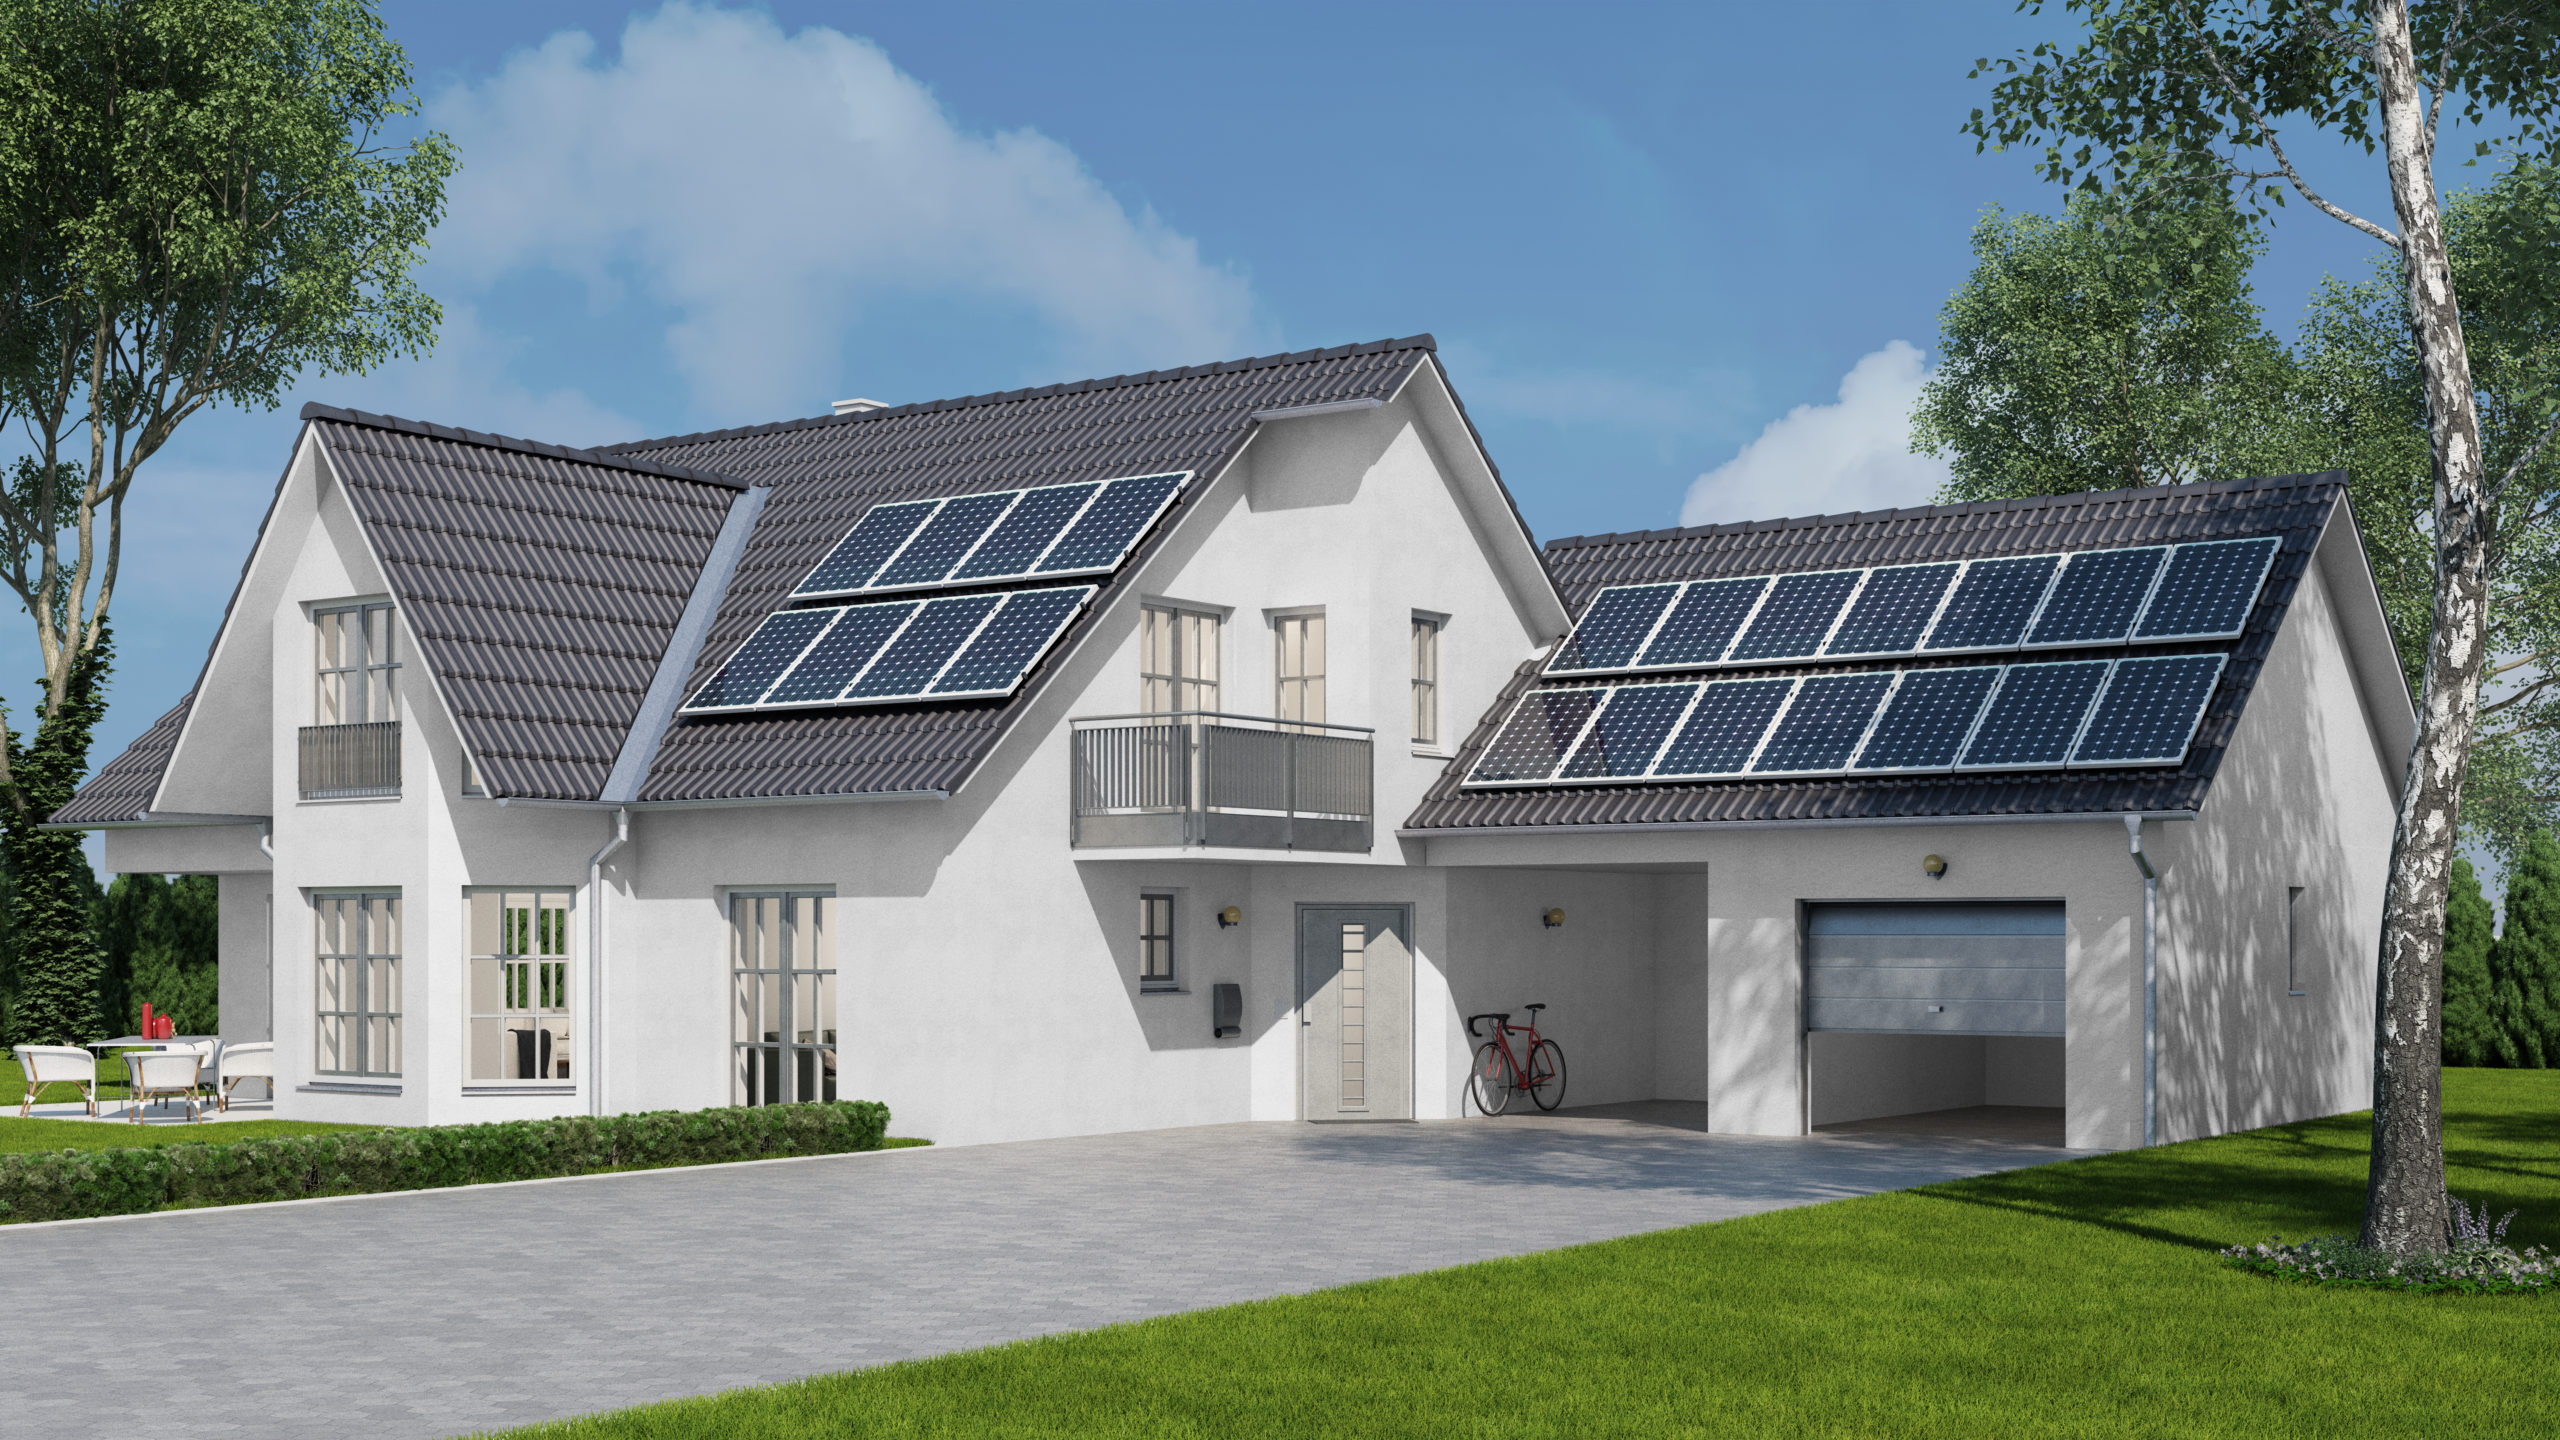 solar powered home